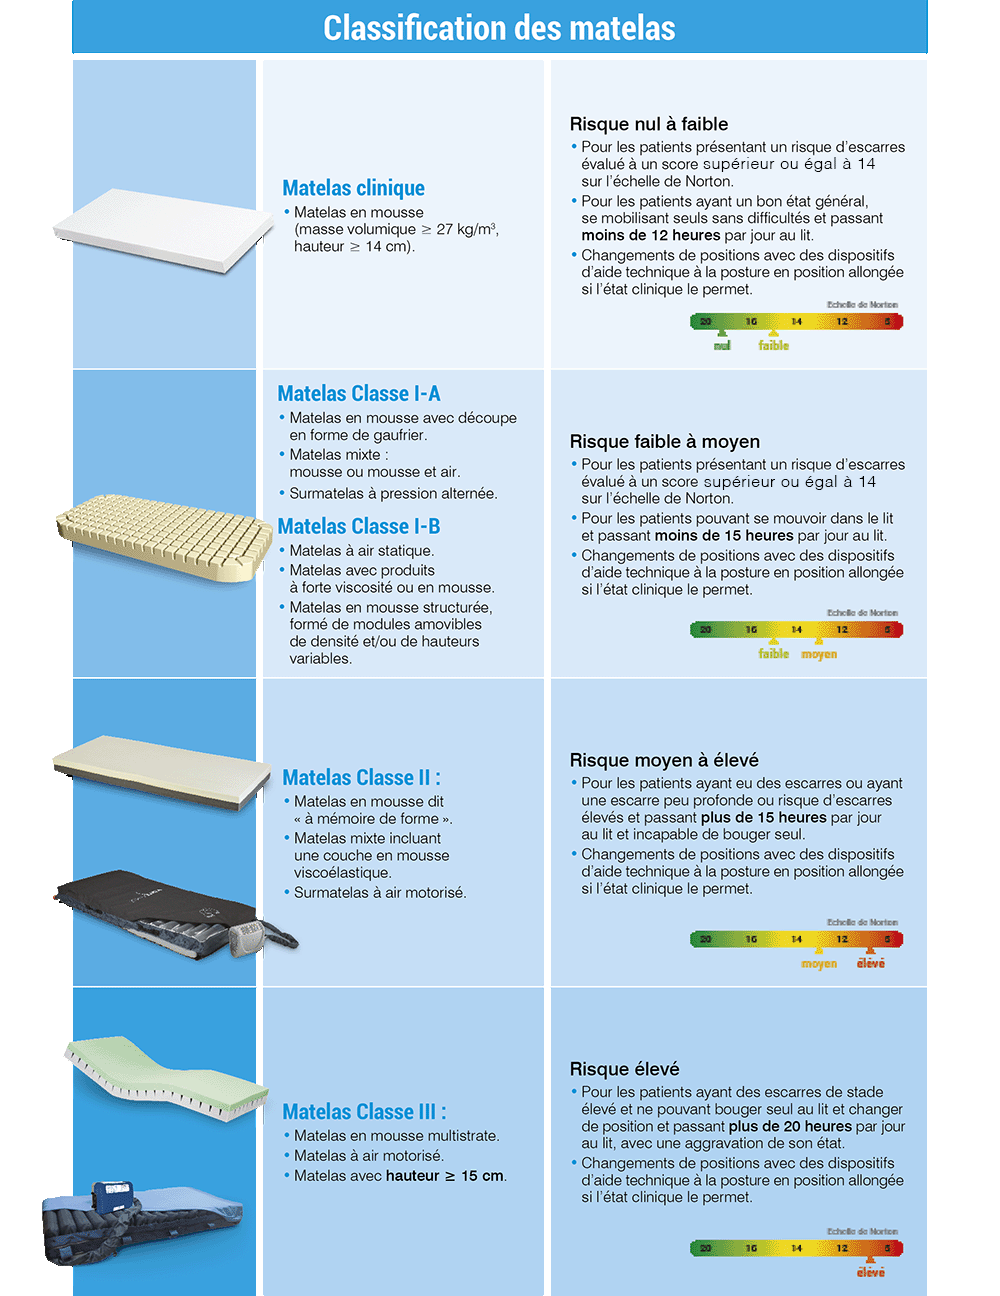 classification de matelas anti escarres